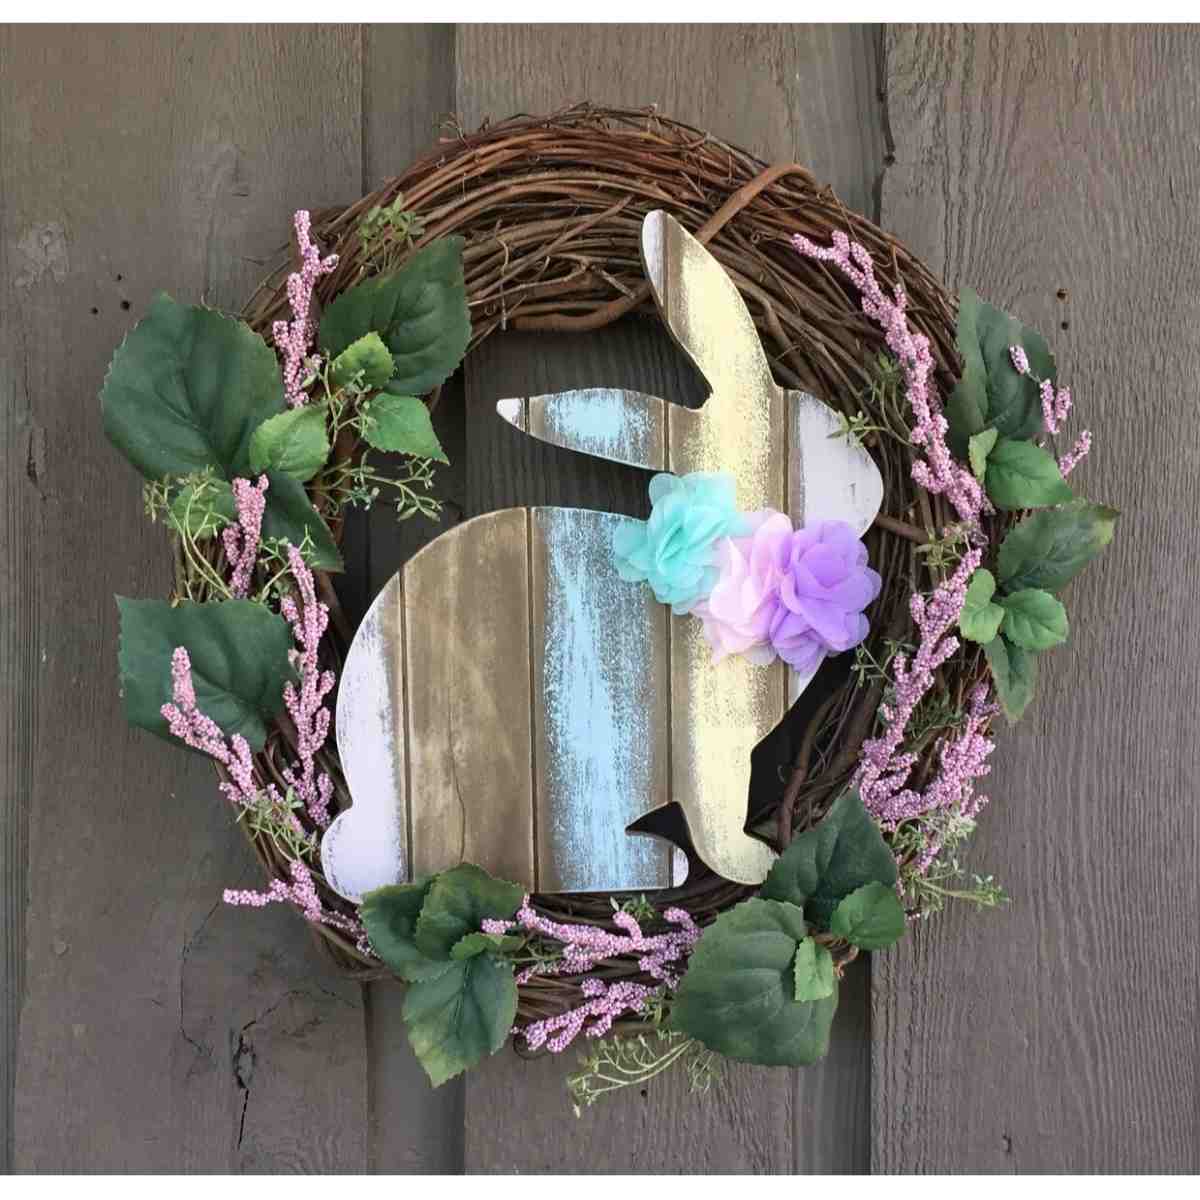 DIY Bunny Wreath